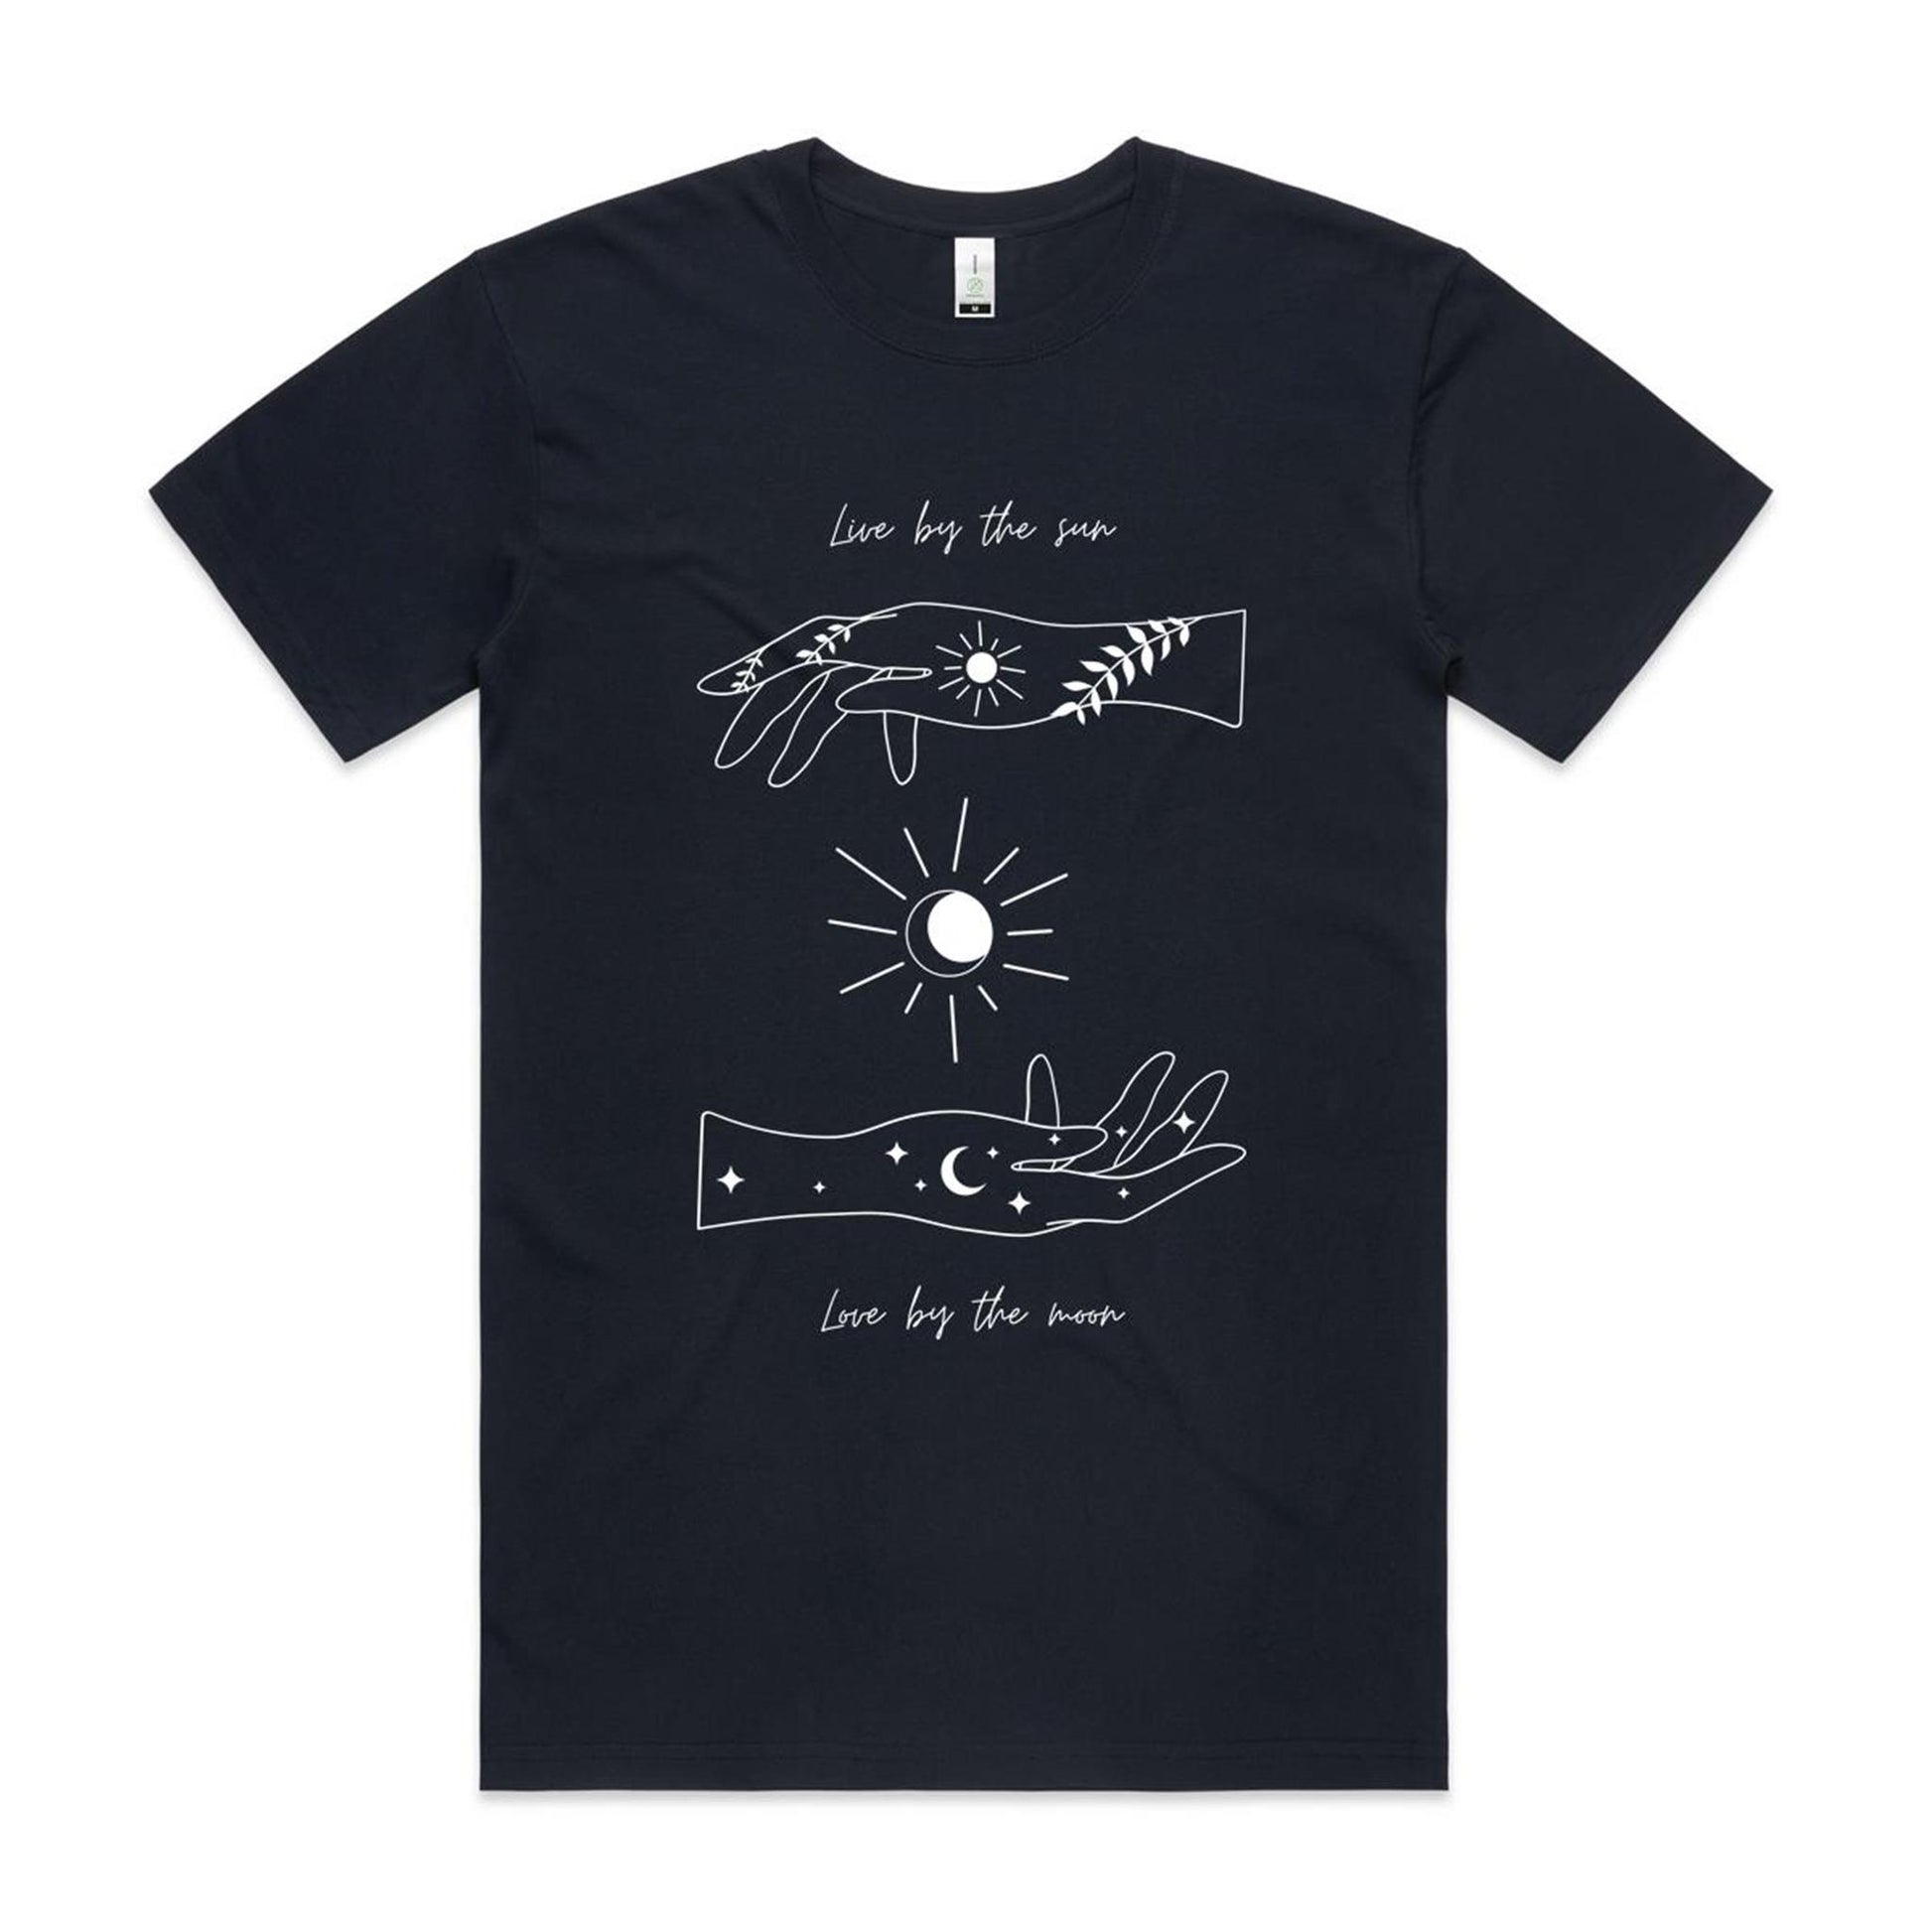 Sun & moon graphic tshirt.